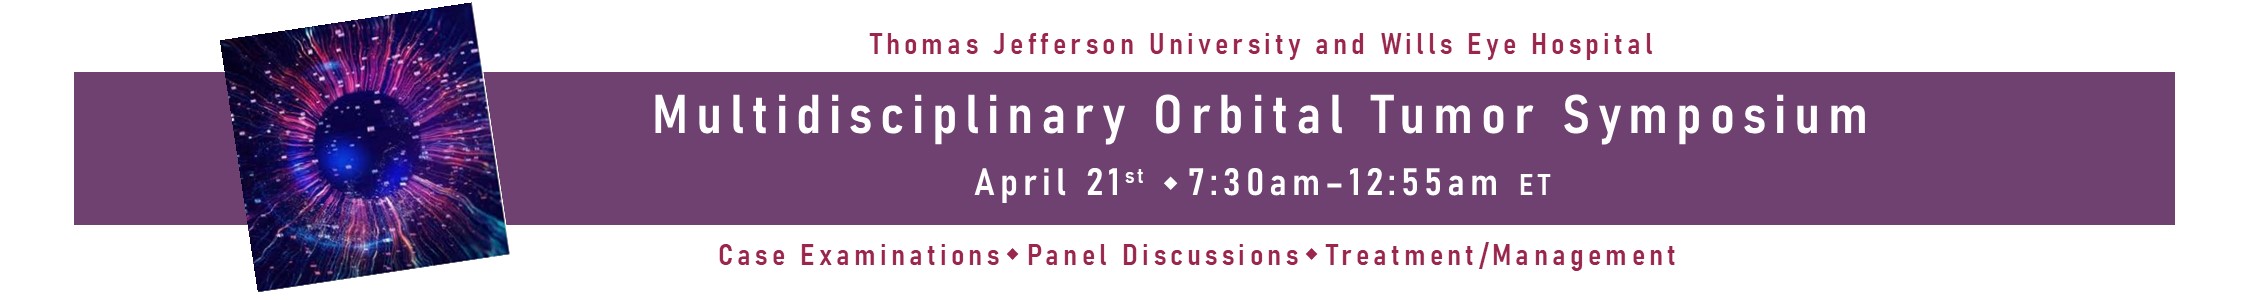 Multidisciplinary Orbital Tumor Symposium Banner